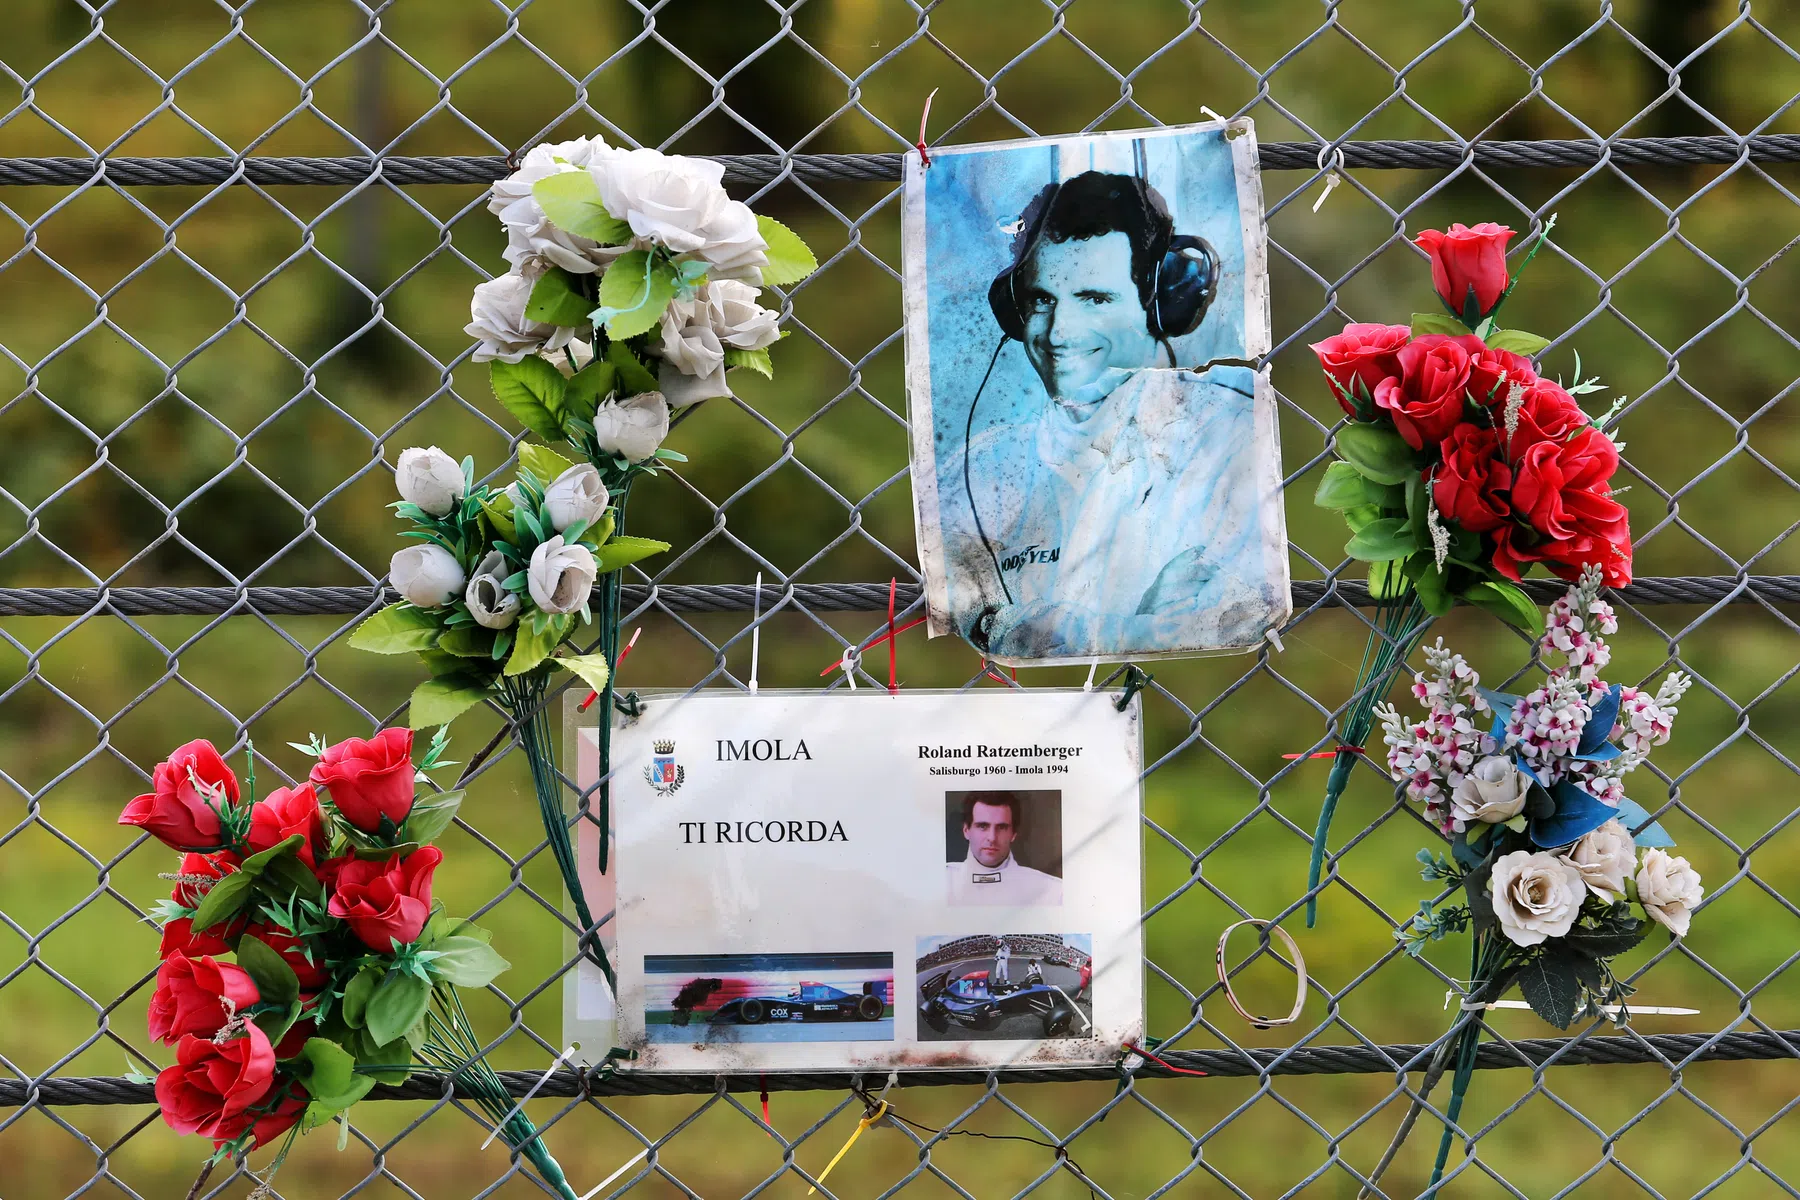 roland ratzenberger documentary series after tragic death in imola 1994